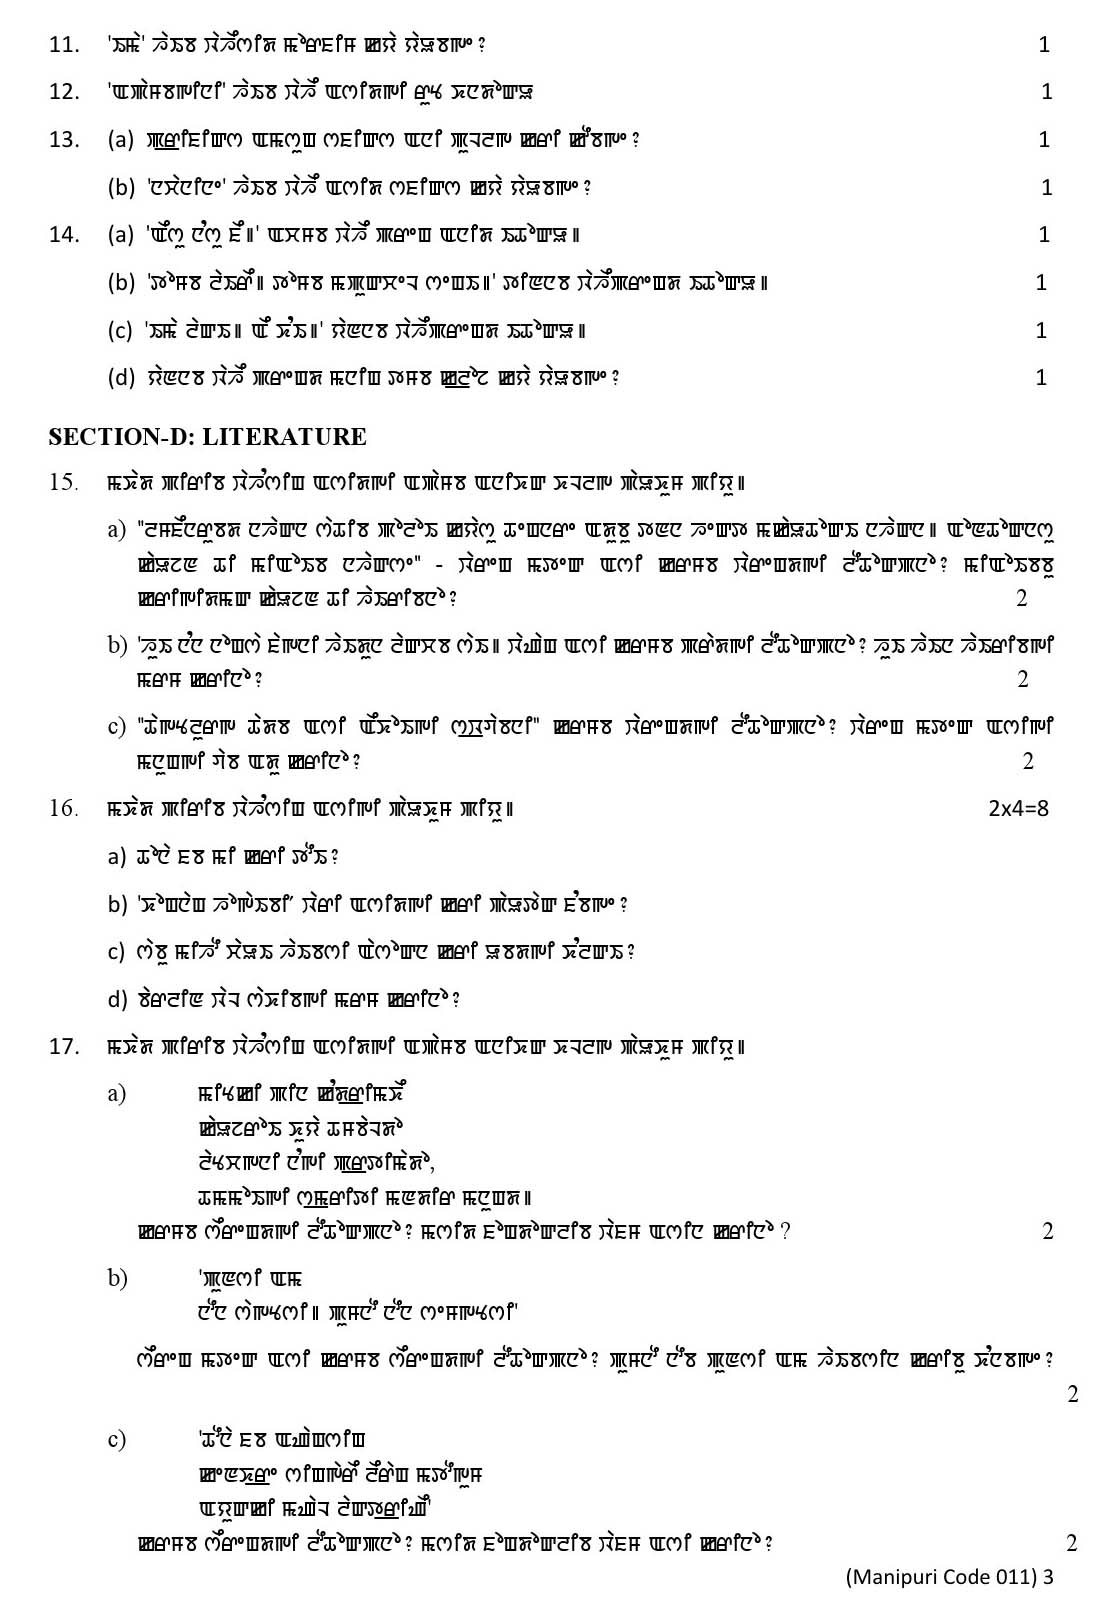 Manipuri CBSE Class X Sample Question Paper 2018-19 - Image 3